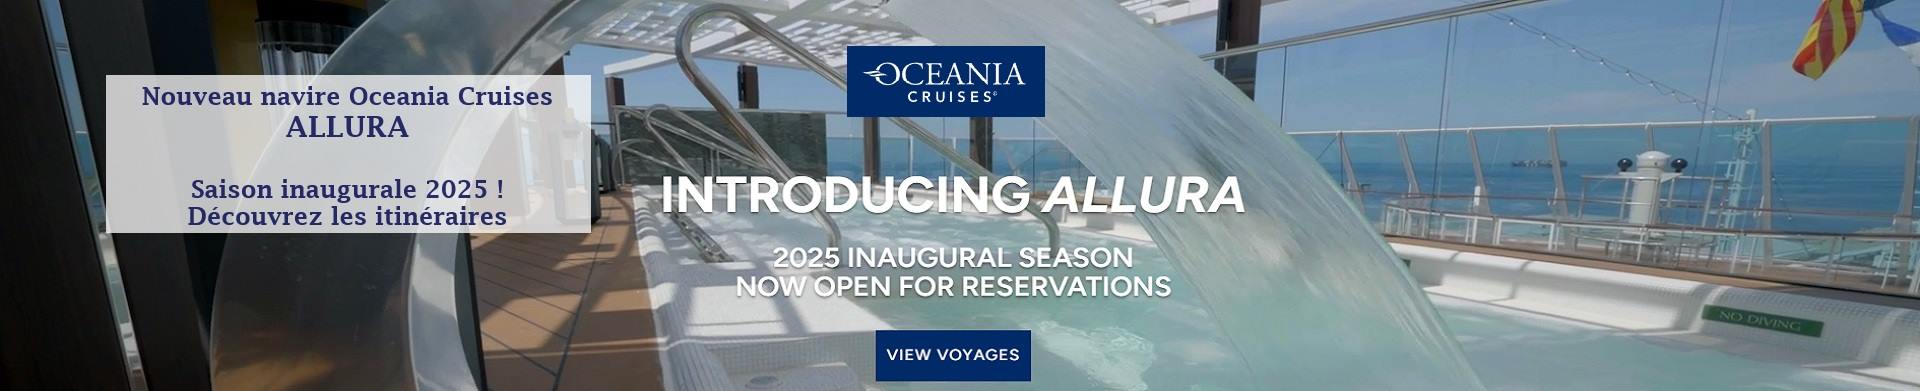 Oceania : Allura saison inaugurale 2025